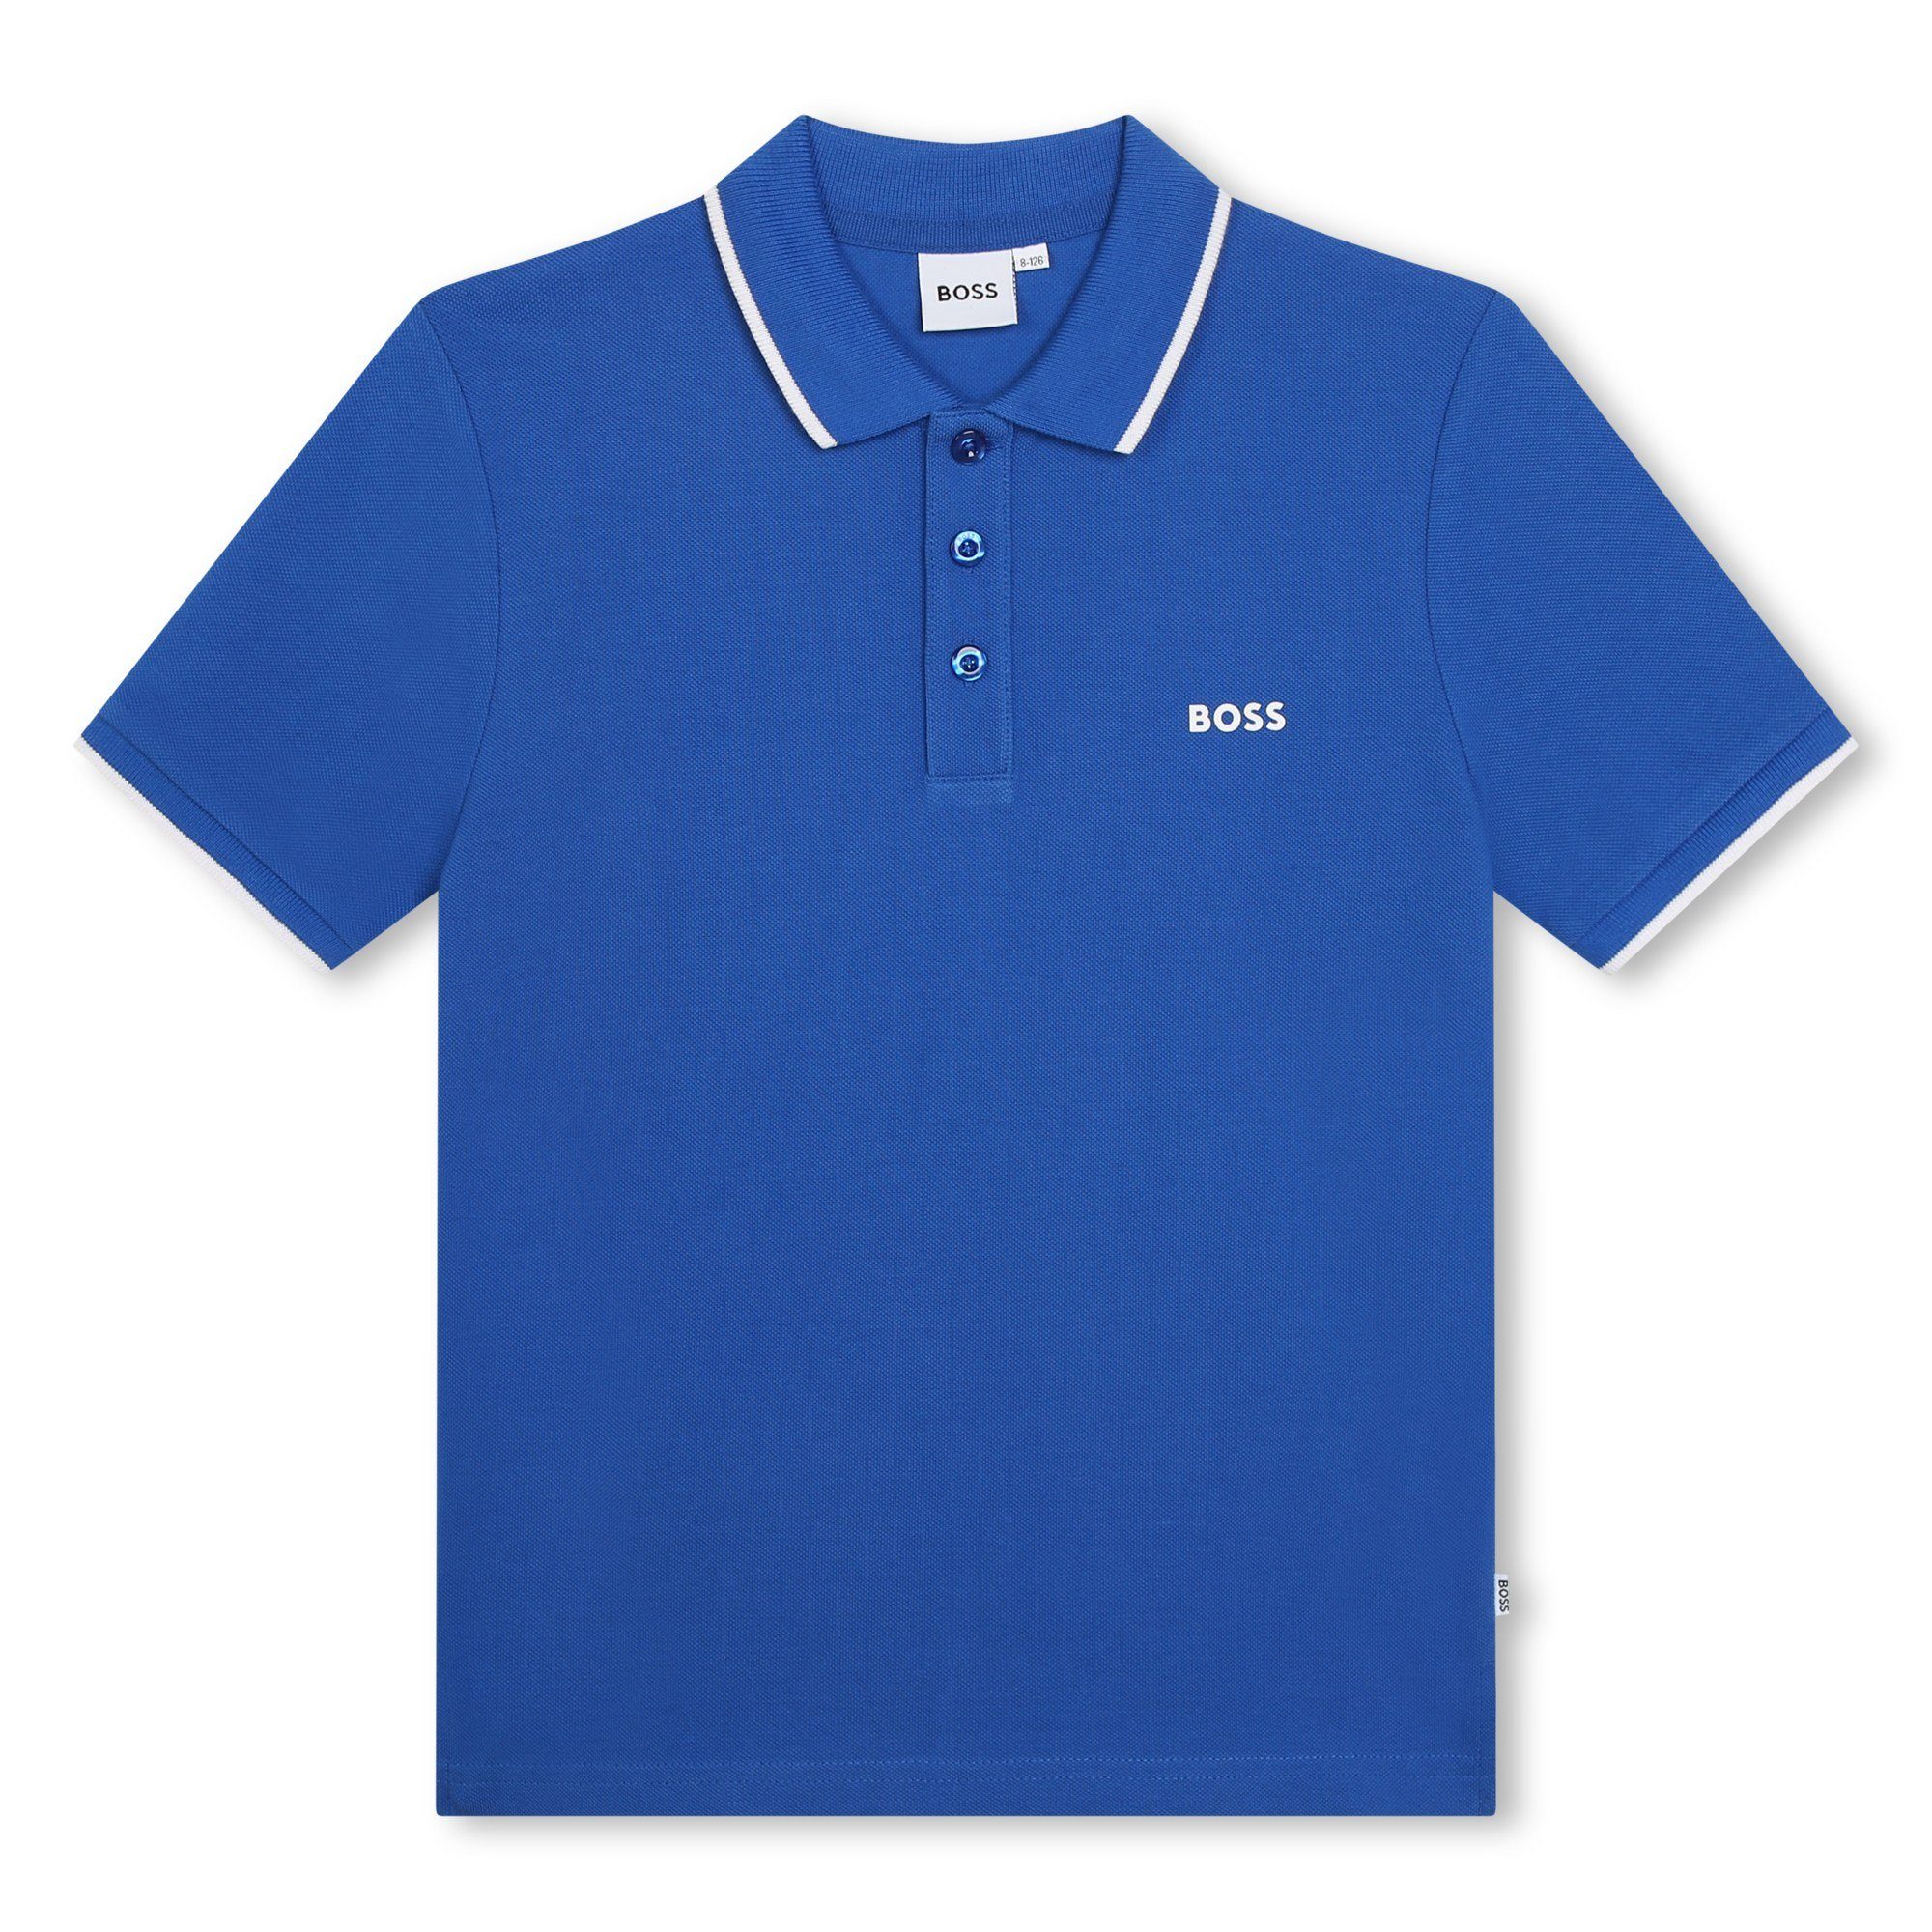 BOSS Poloshirt BOSS Kids Poloshirt blau mit weißen Abschlüssen und Logo